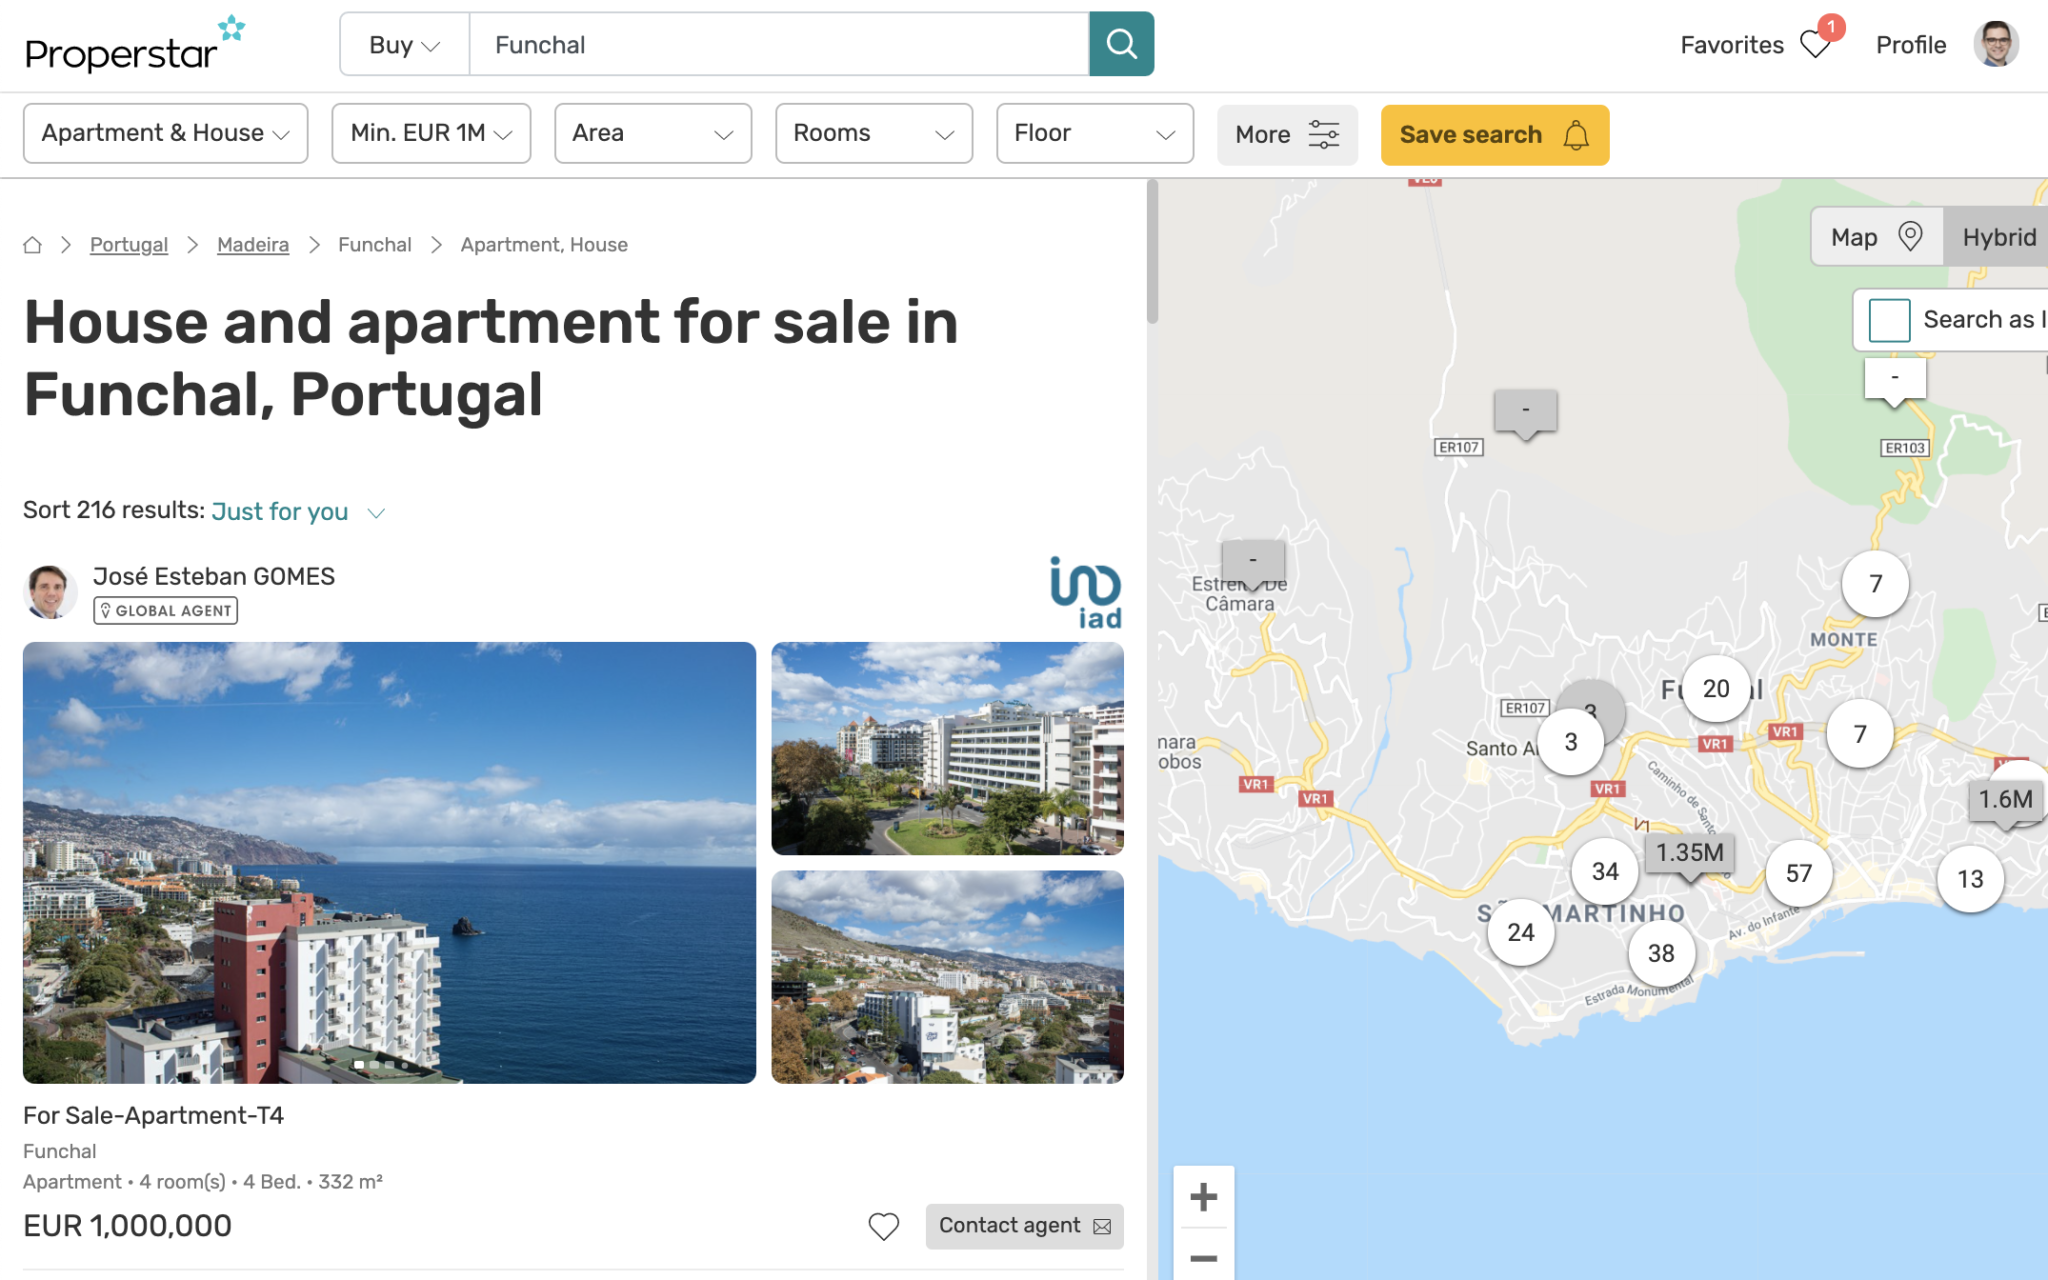 Luxury properties for sale in Funchal